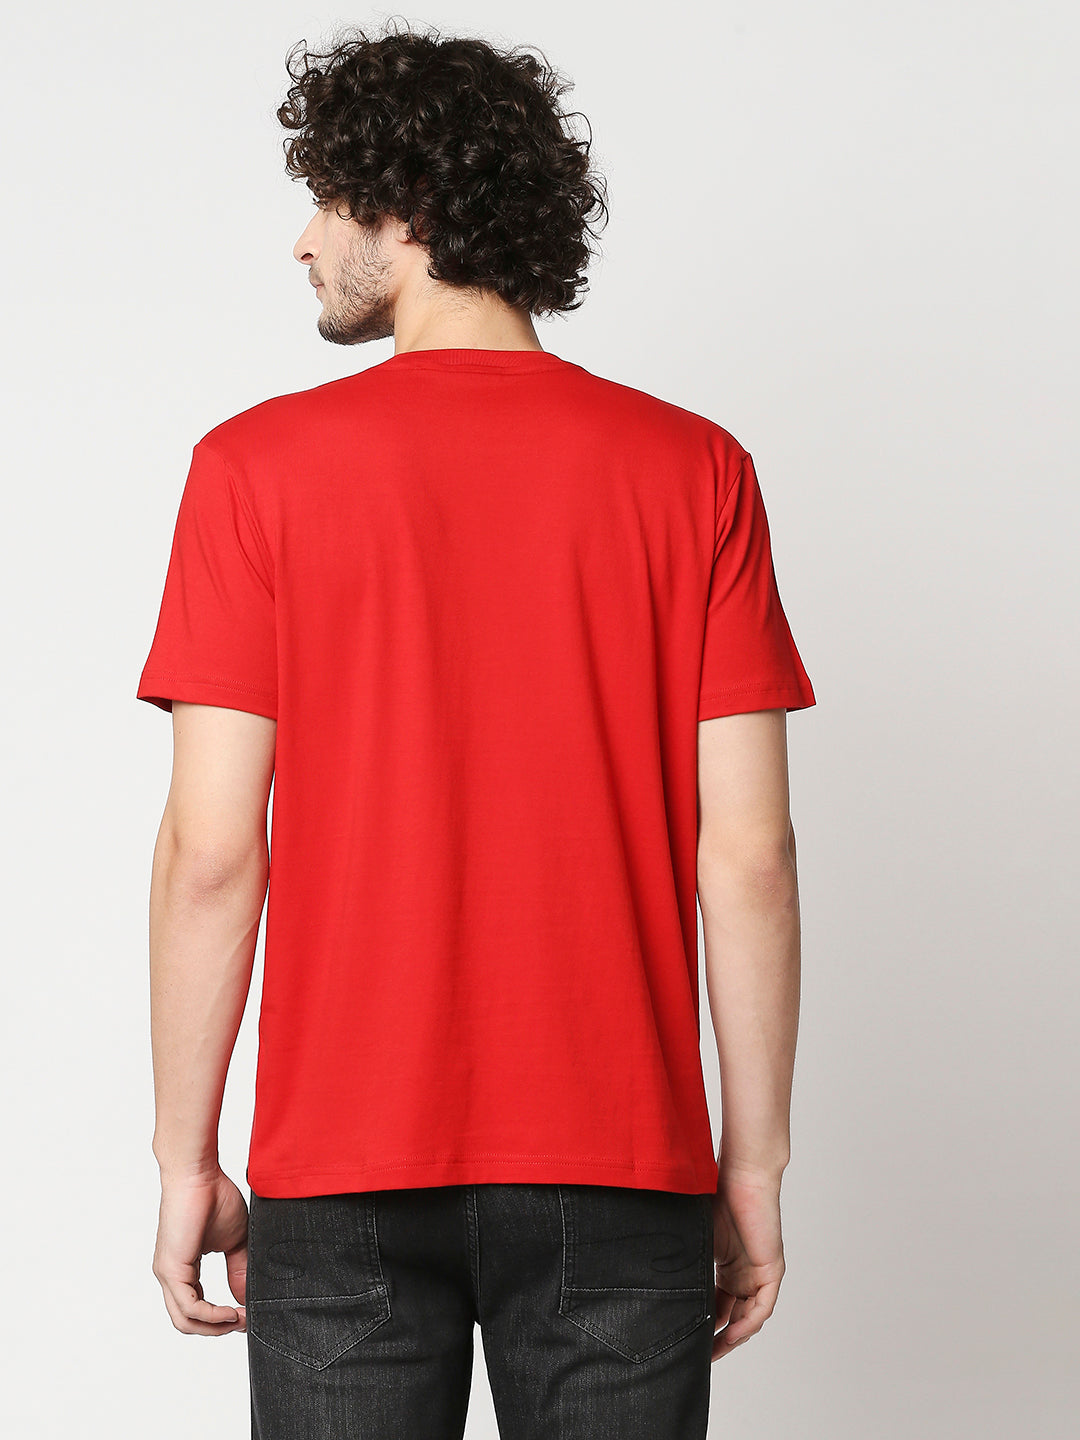 Buy BLAMBLACK Men Round neck Regular T-Shirt Red Color Printed Half sleeves